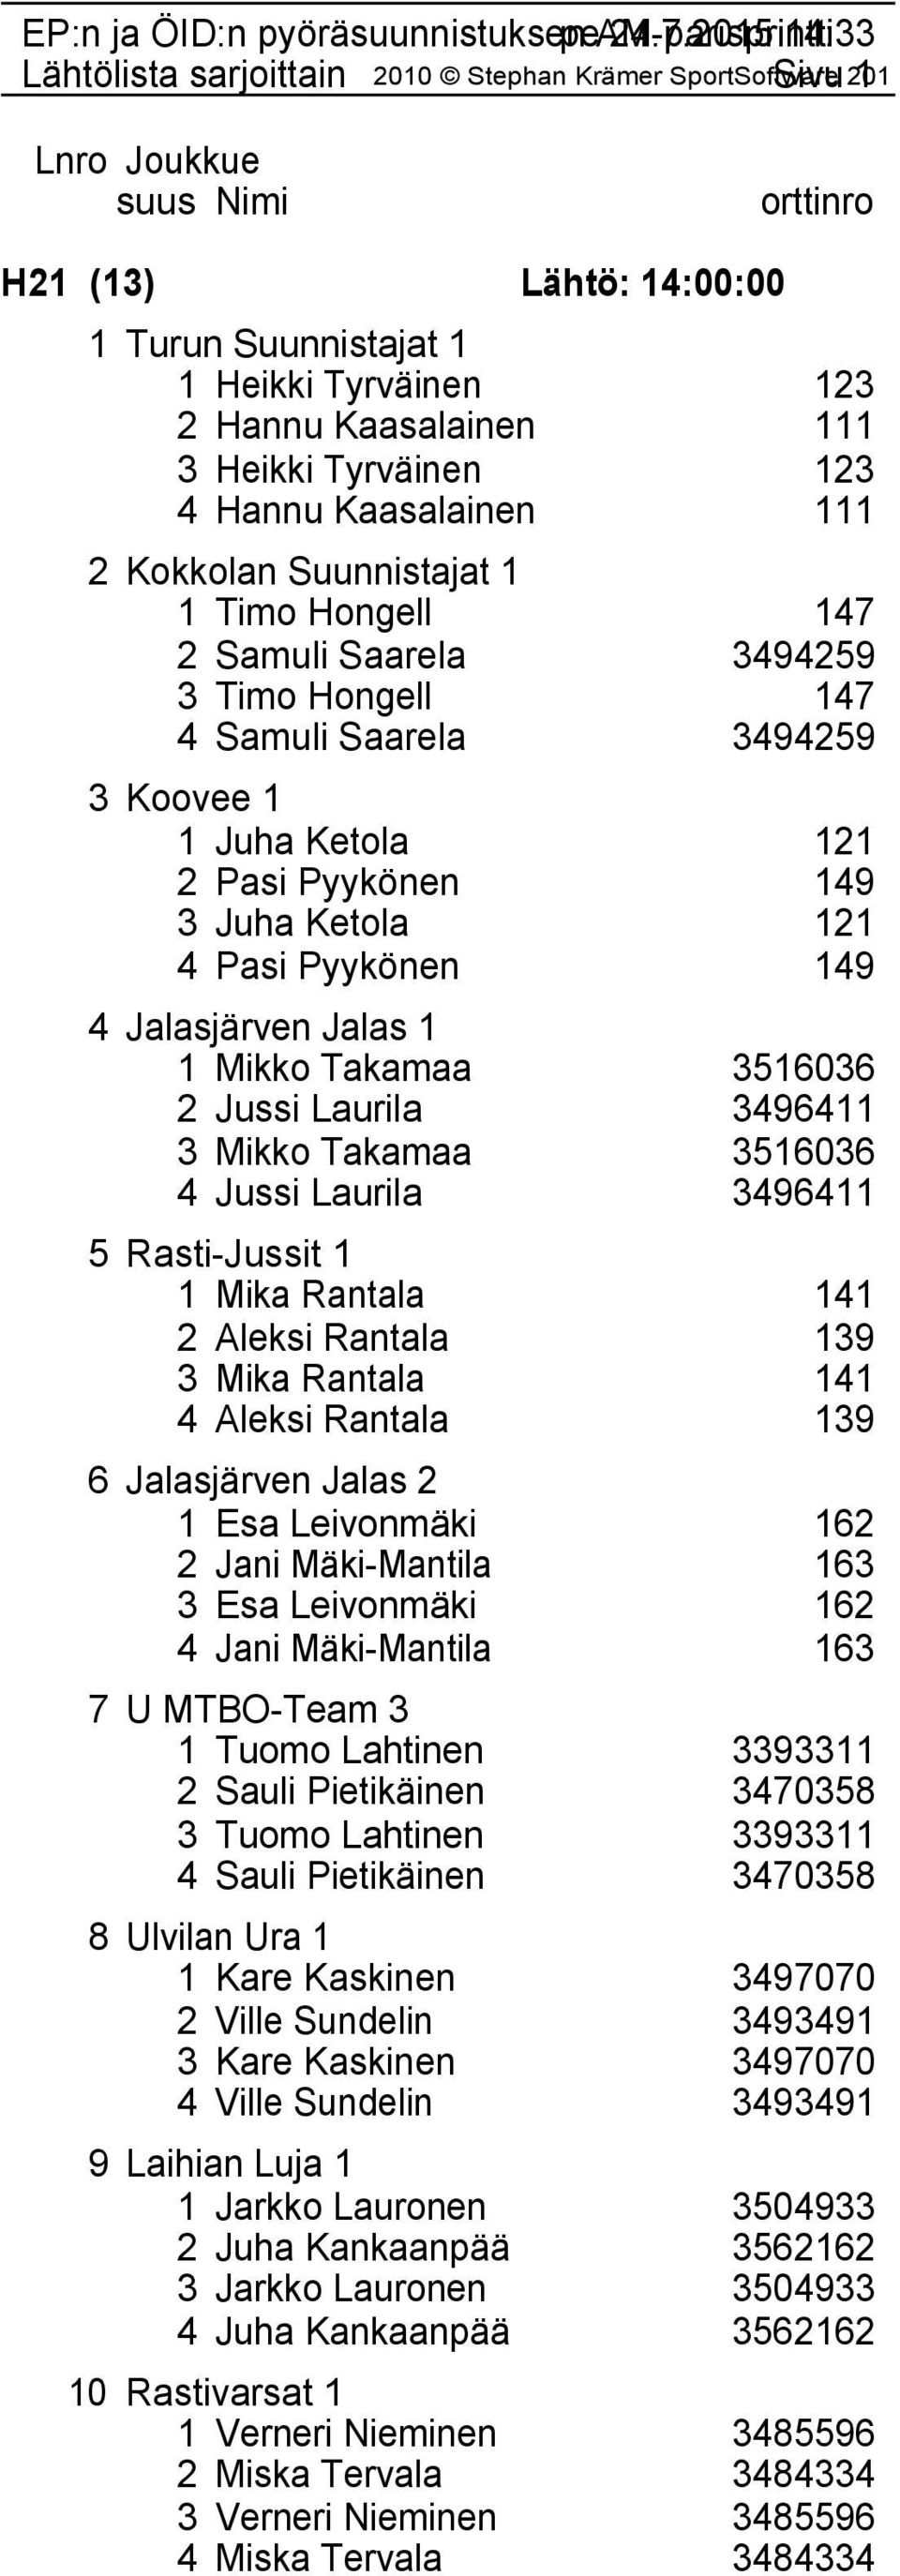 Mikko Takamaa 3516036 2 Jussi Laurila 3496411 3 Mikko Takamaa 3516036 4 Jussi Laurila 3496411 5 Rasti-Jussit 1 1 Mika Rantala 141 2 Aleksi Rantala 139 3 Mika Rantala 141 4 Aleksi Rantala 139 6